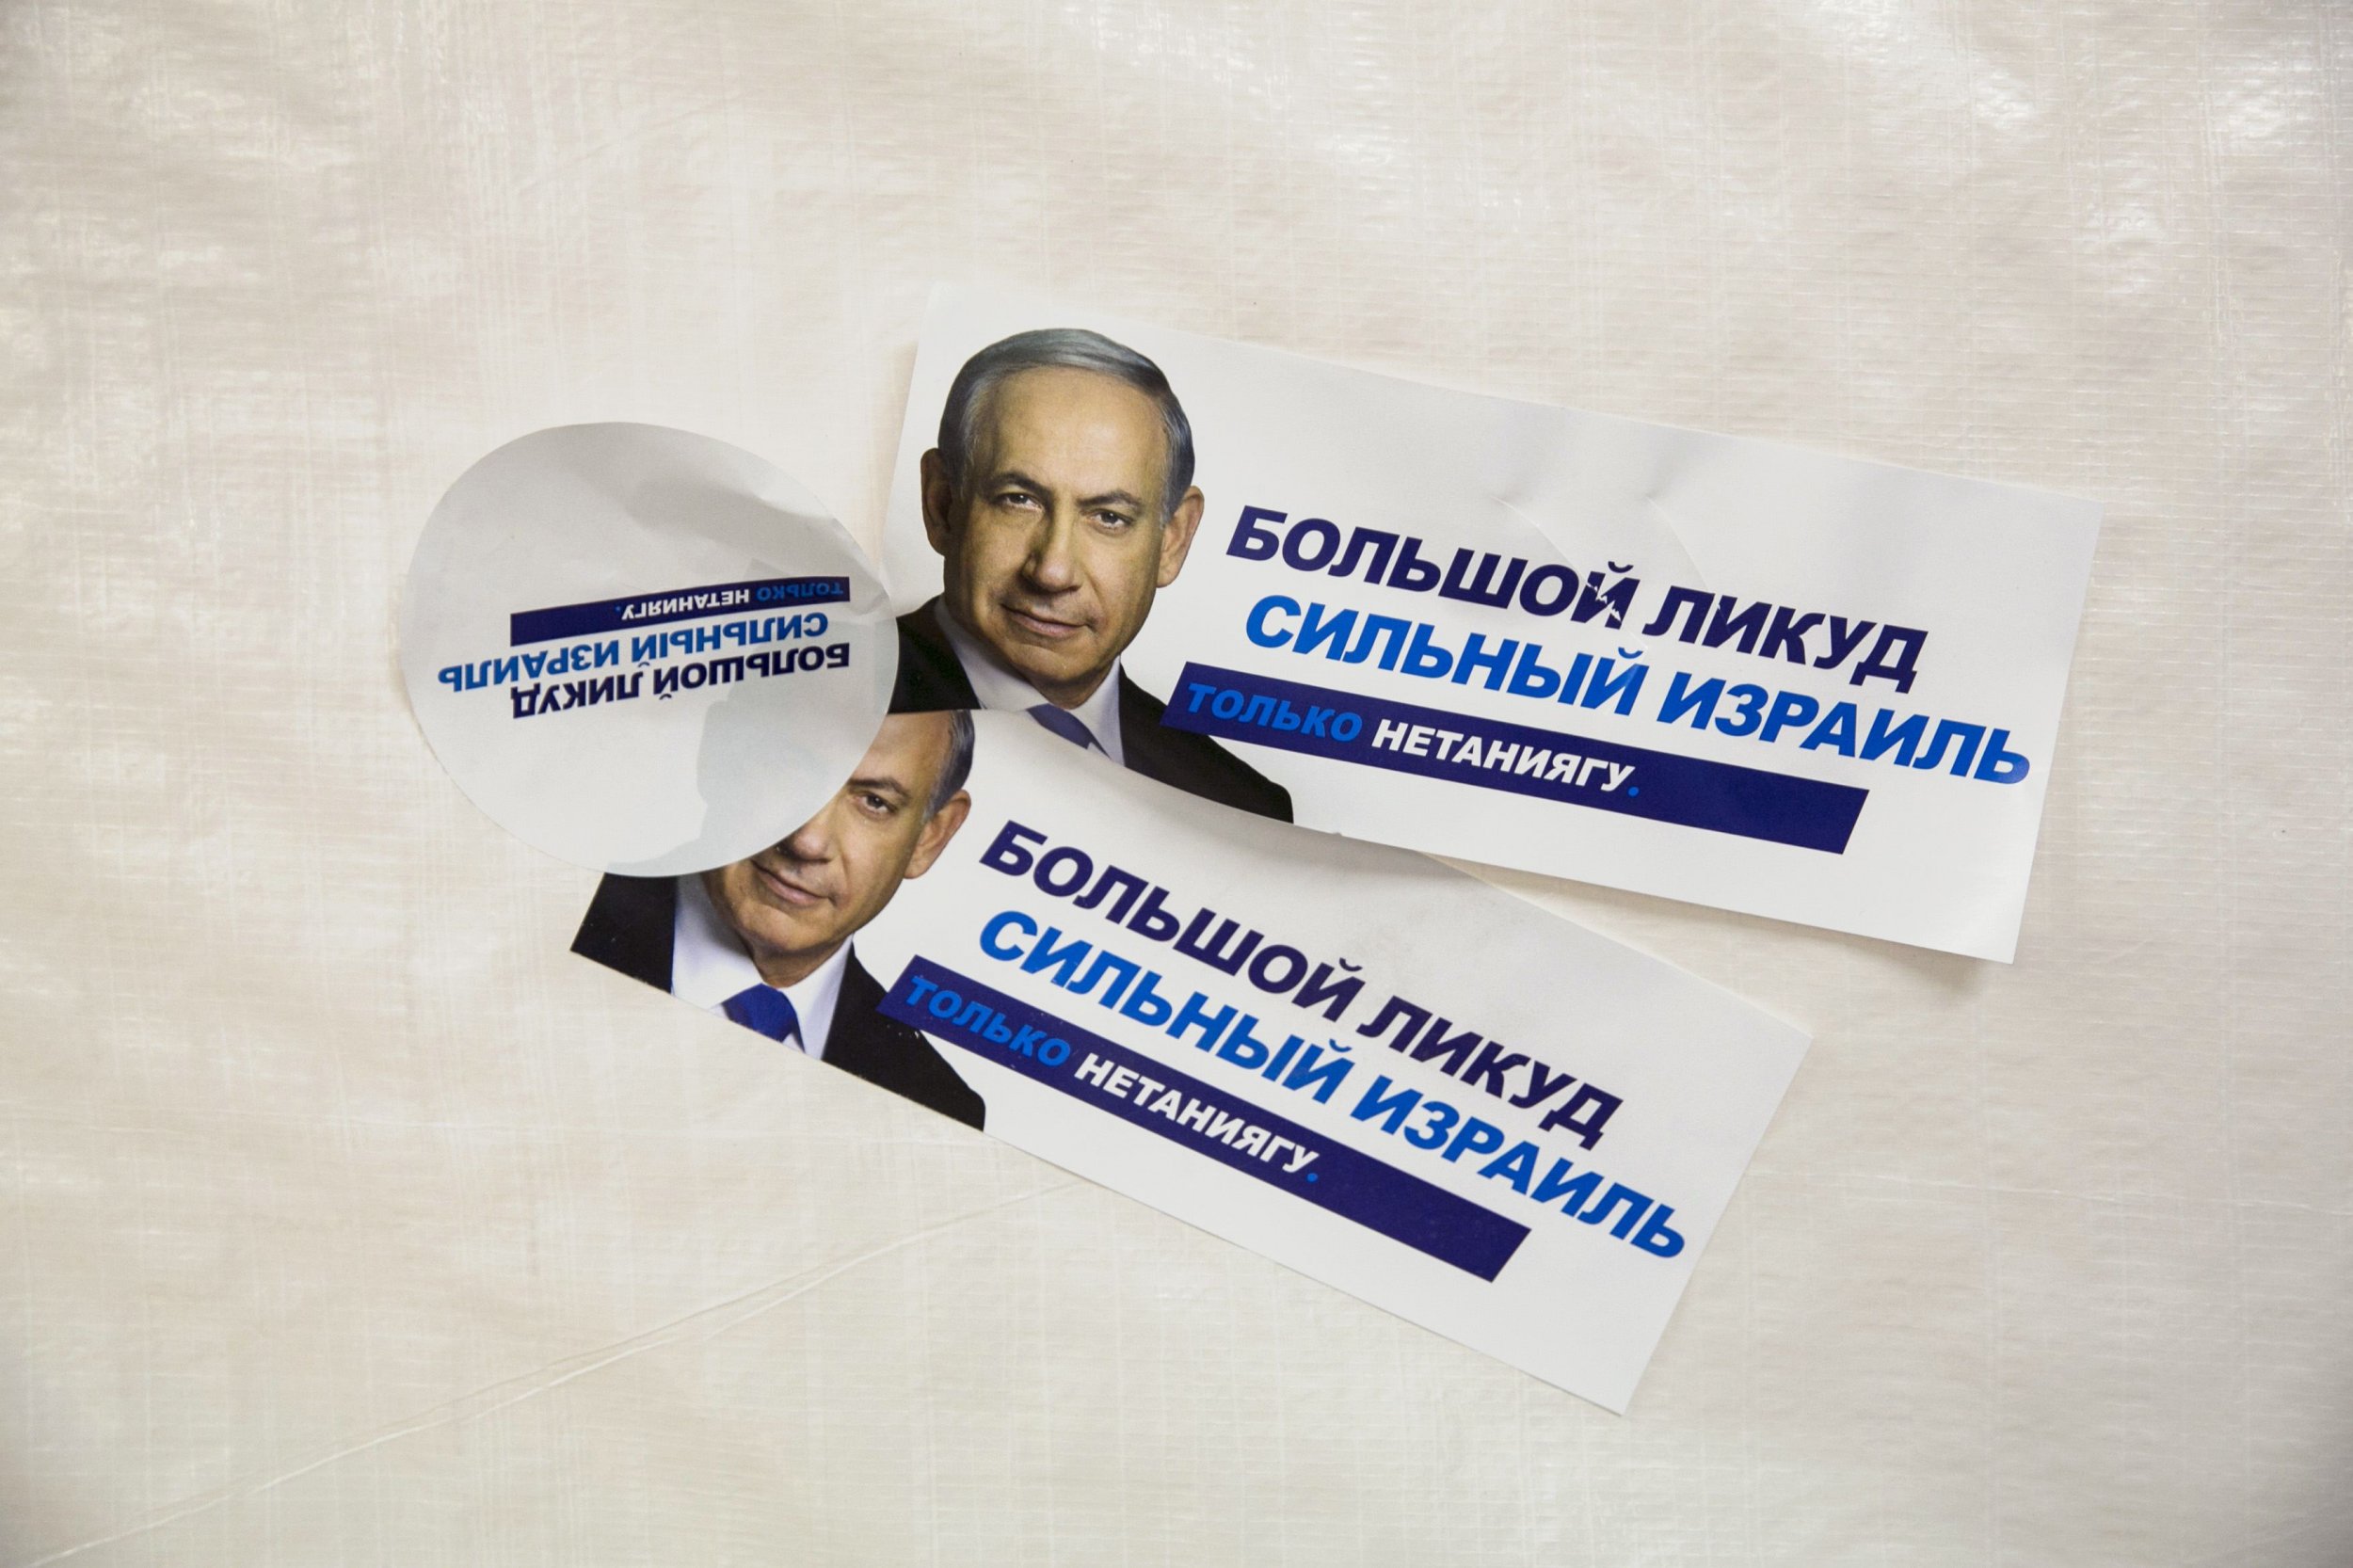 Paul Begala joins campaign against Netanyahu